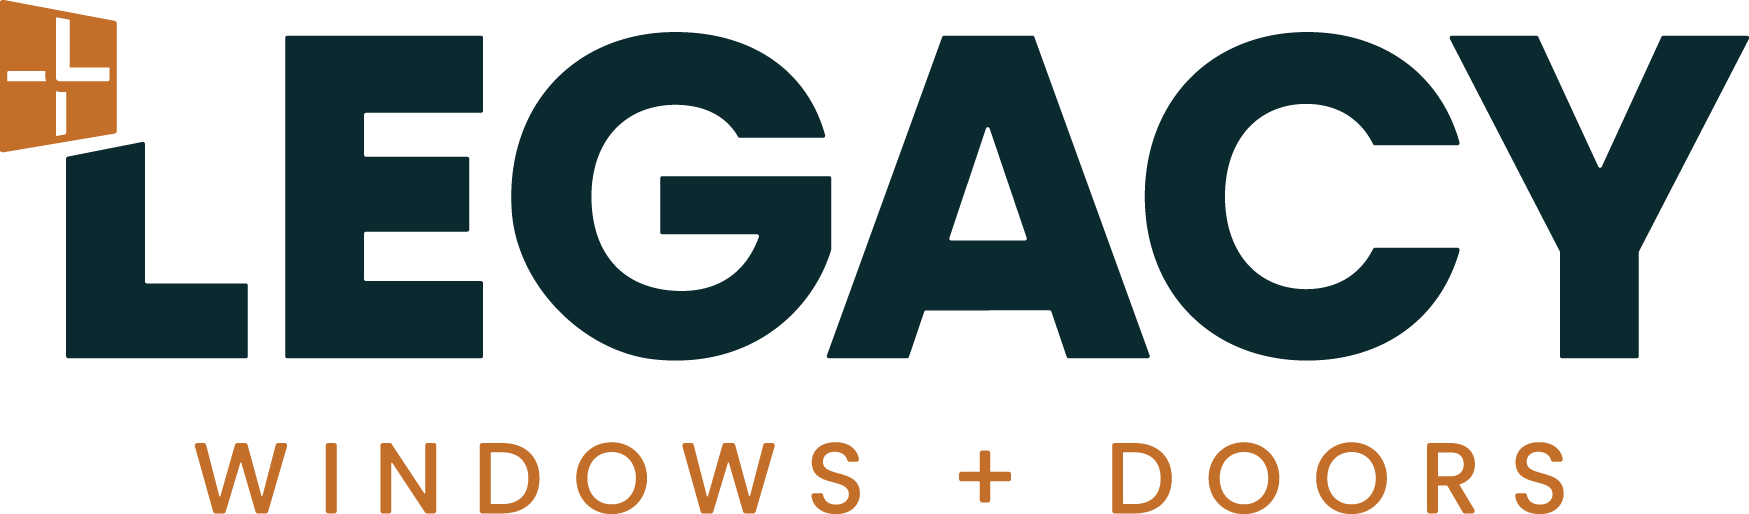 Legacy Windows & Doors's logo